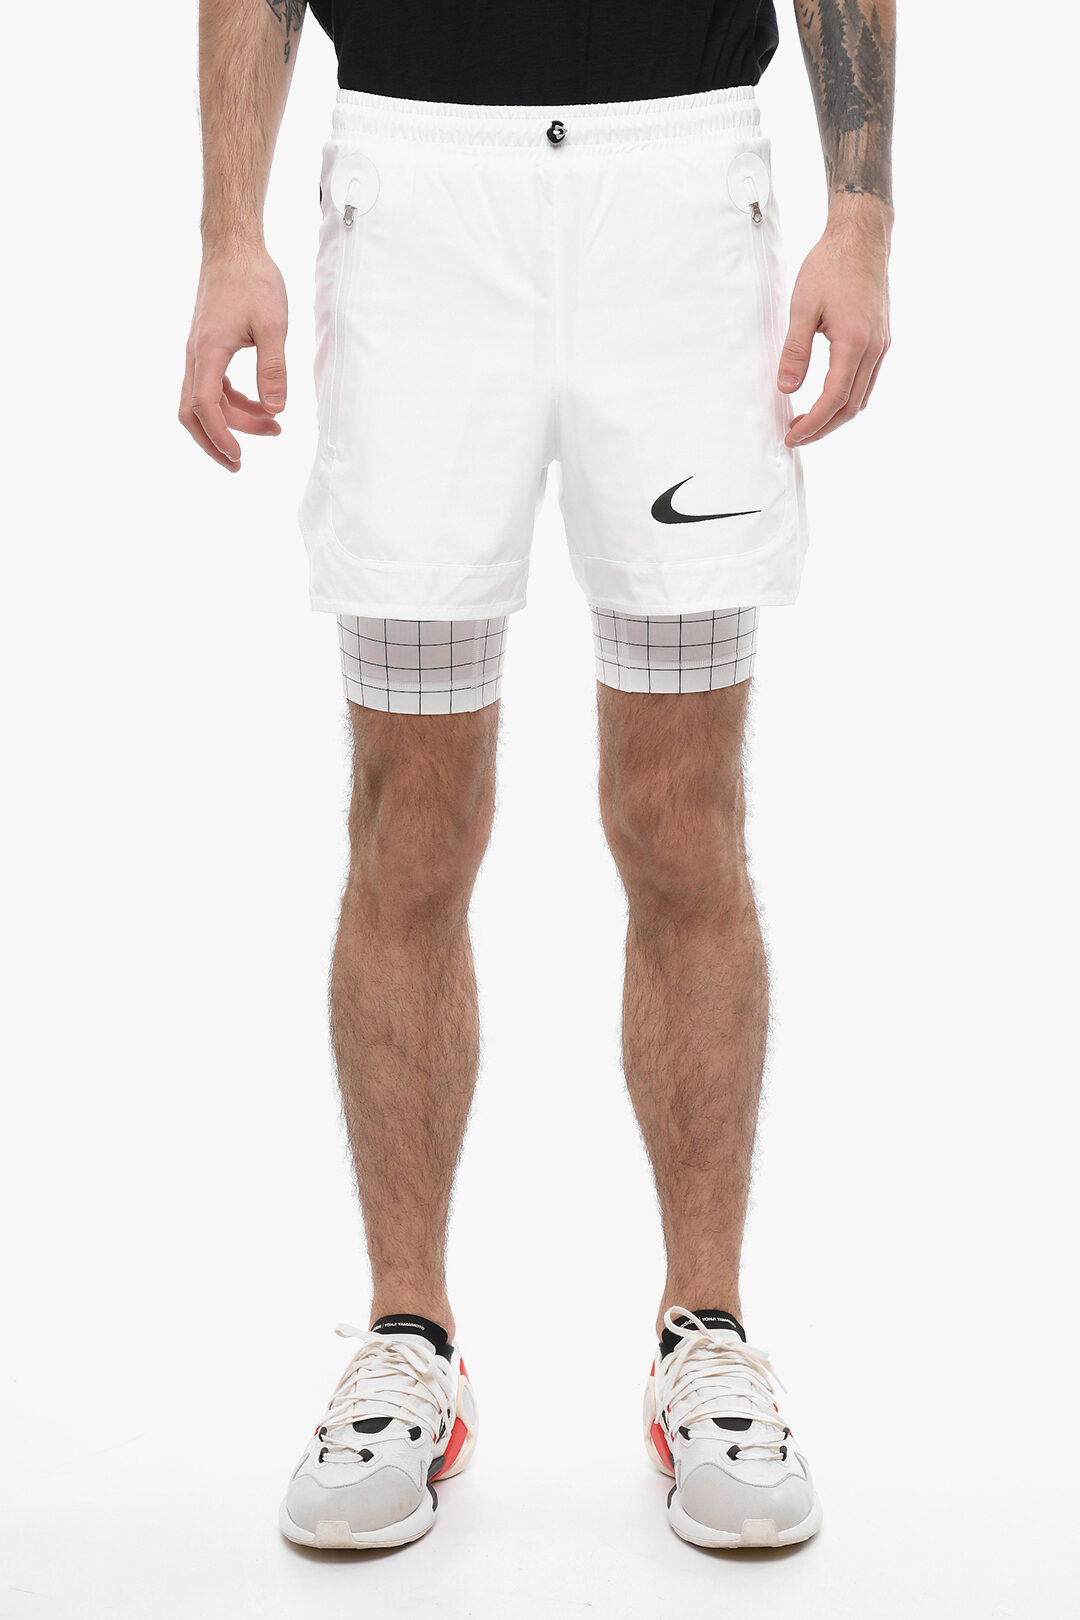 NIKE X OFF-WHITE Double-layered Shorts with Elastic Waistband